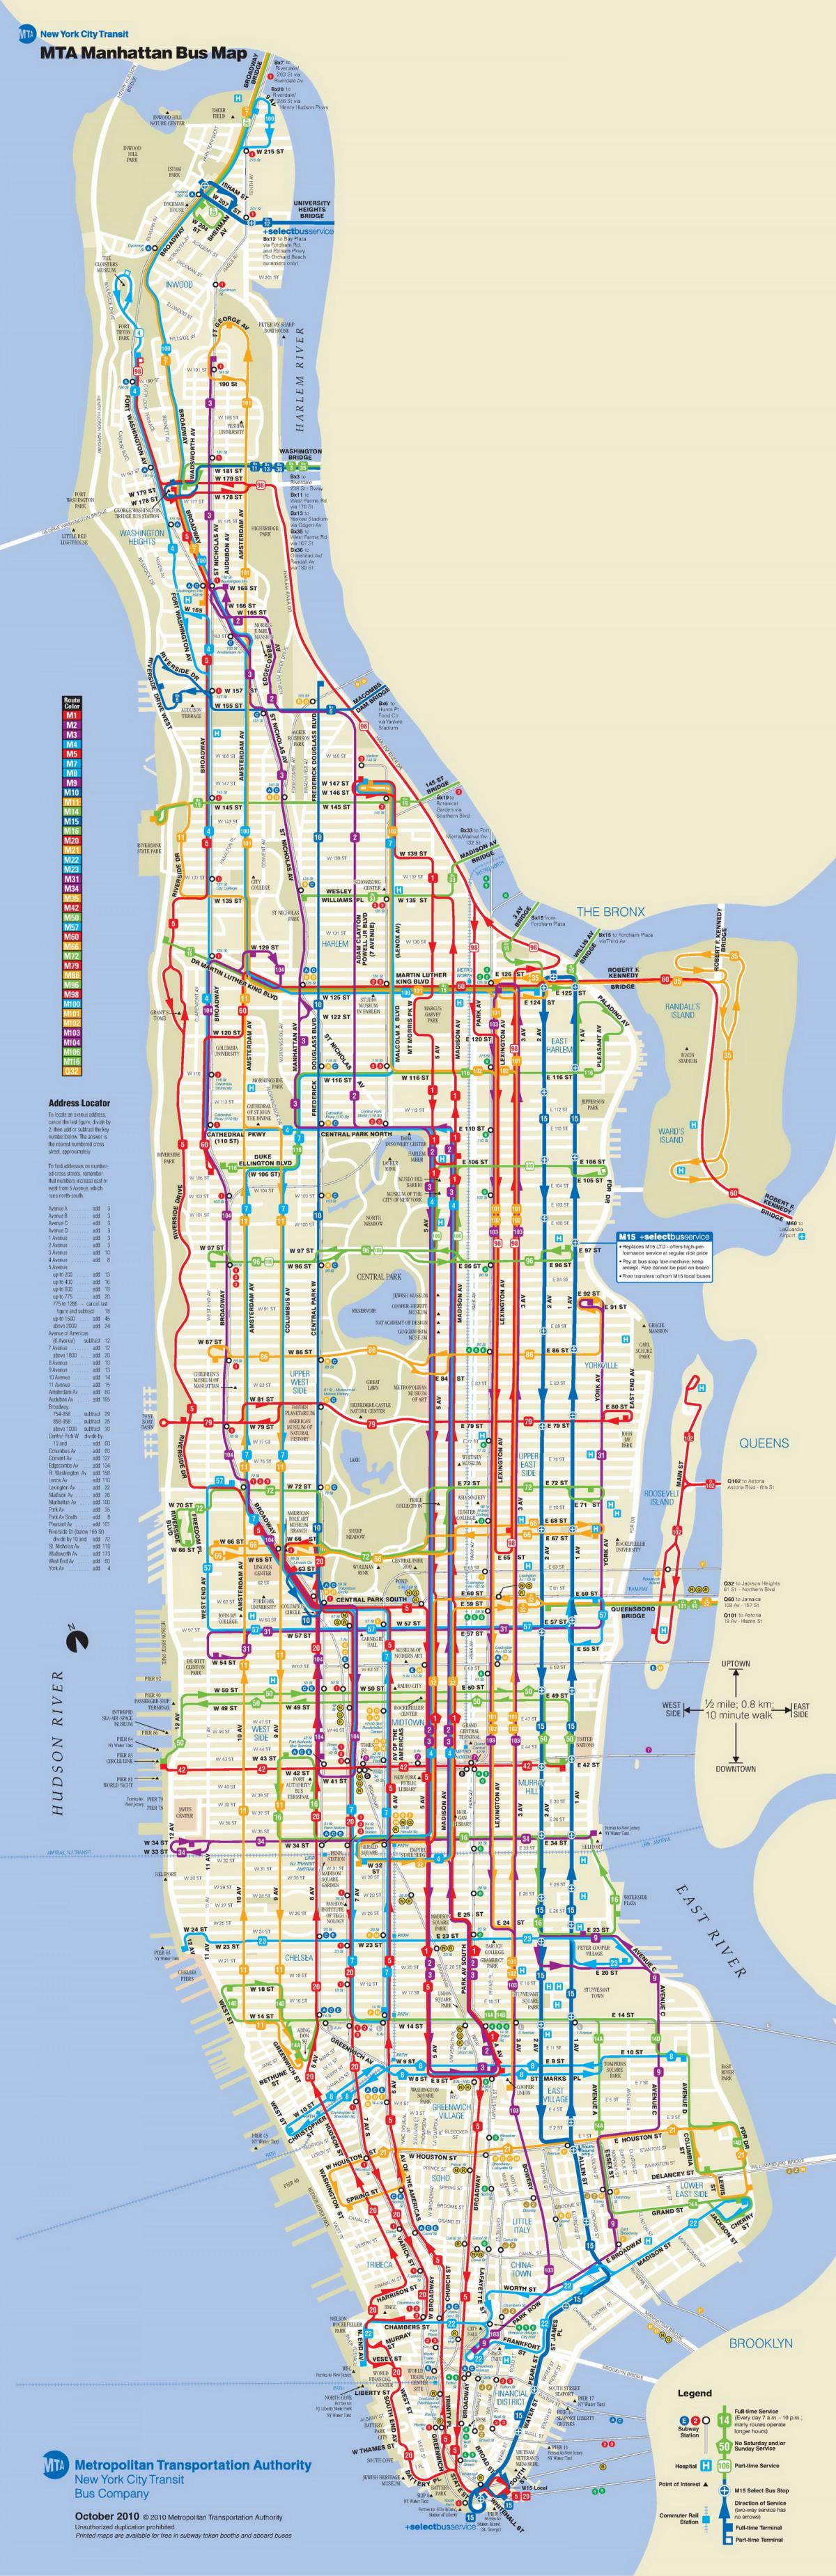 MTA بس کا نقشہ مین ہٹن